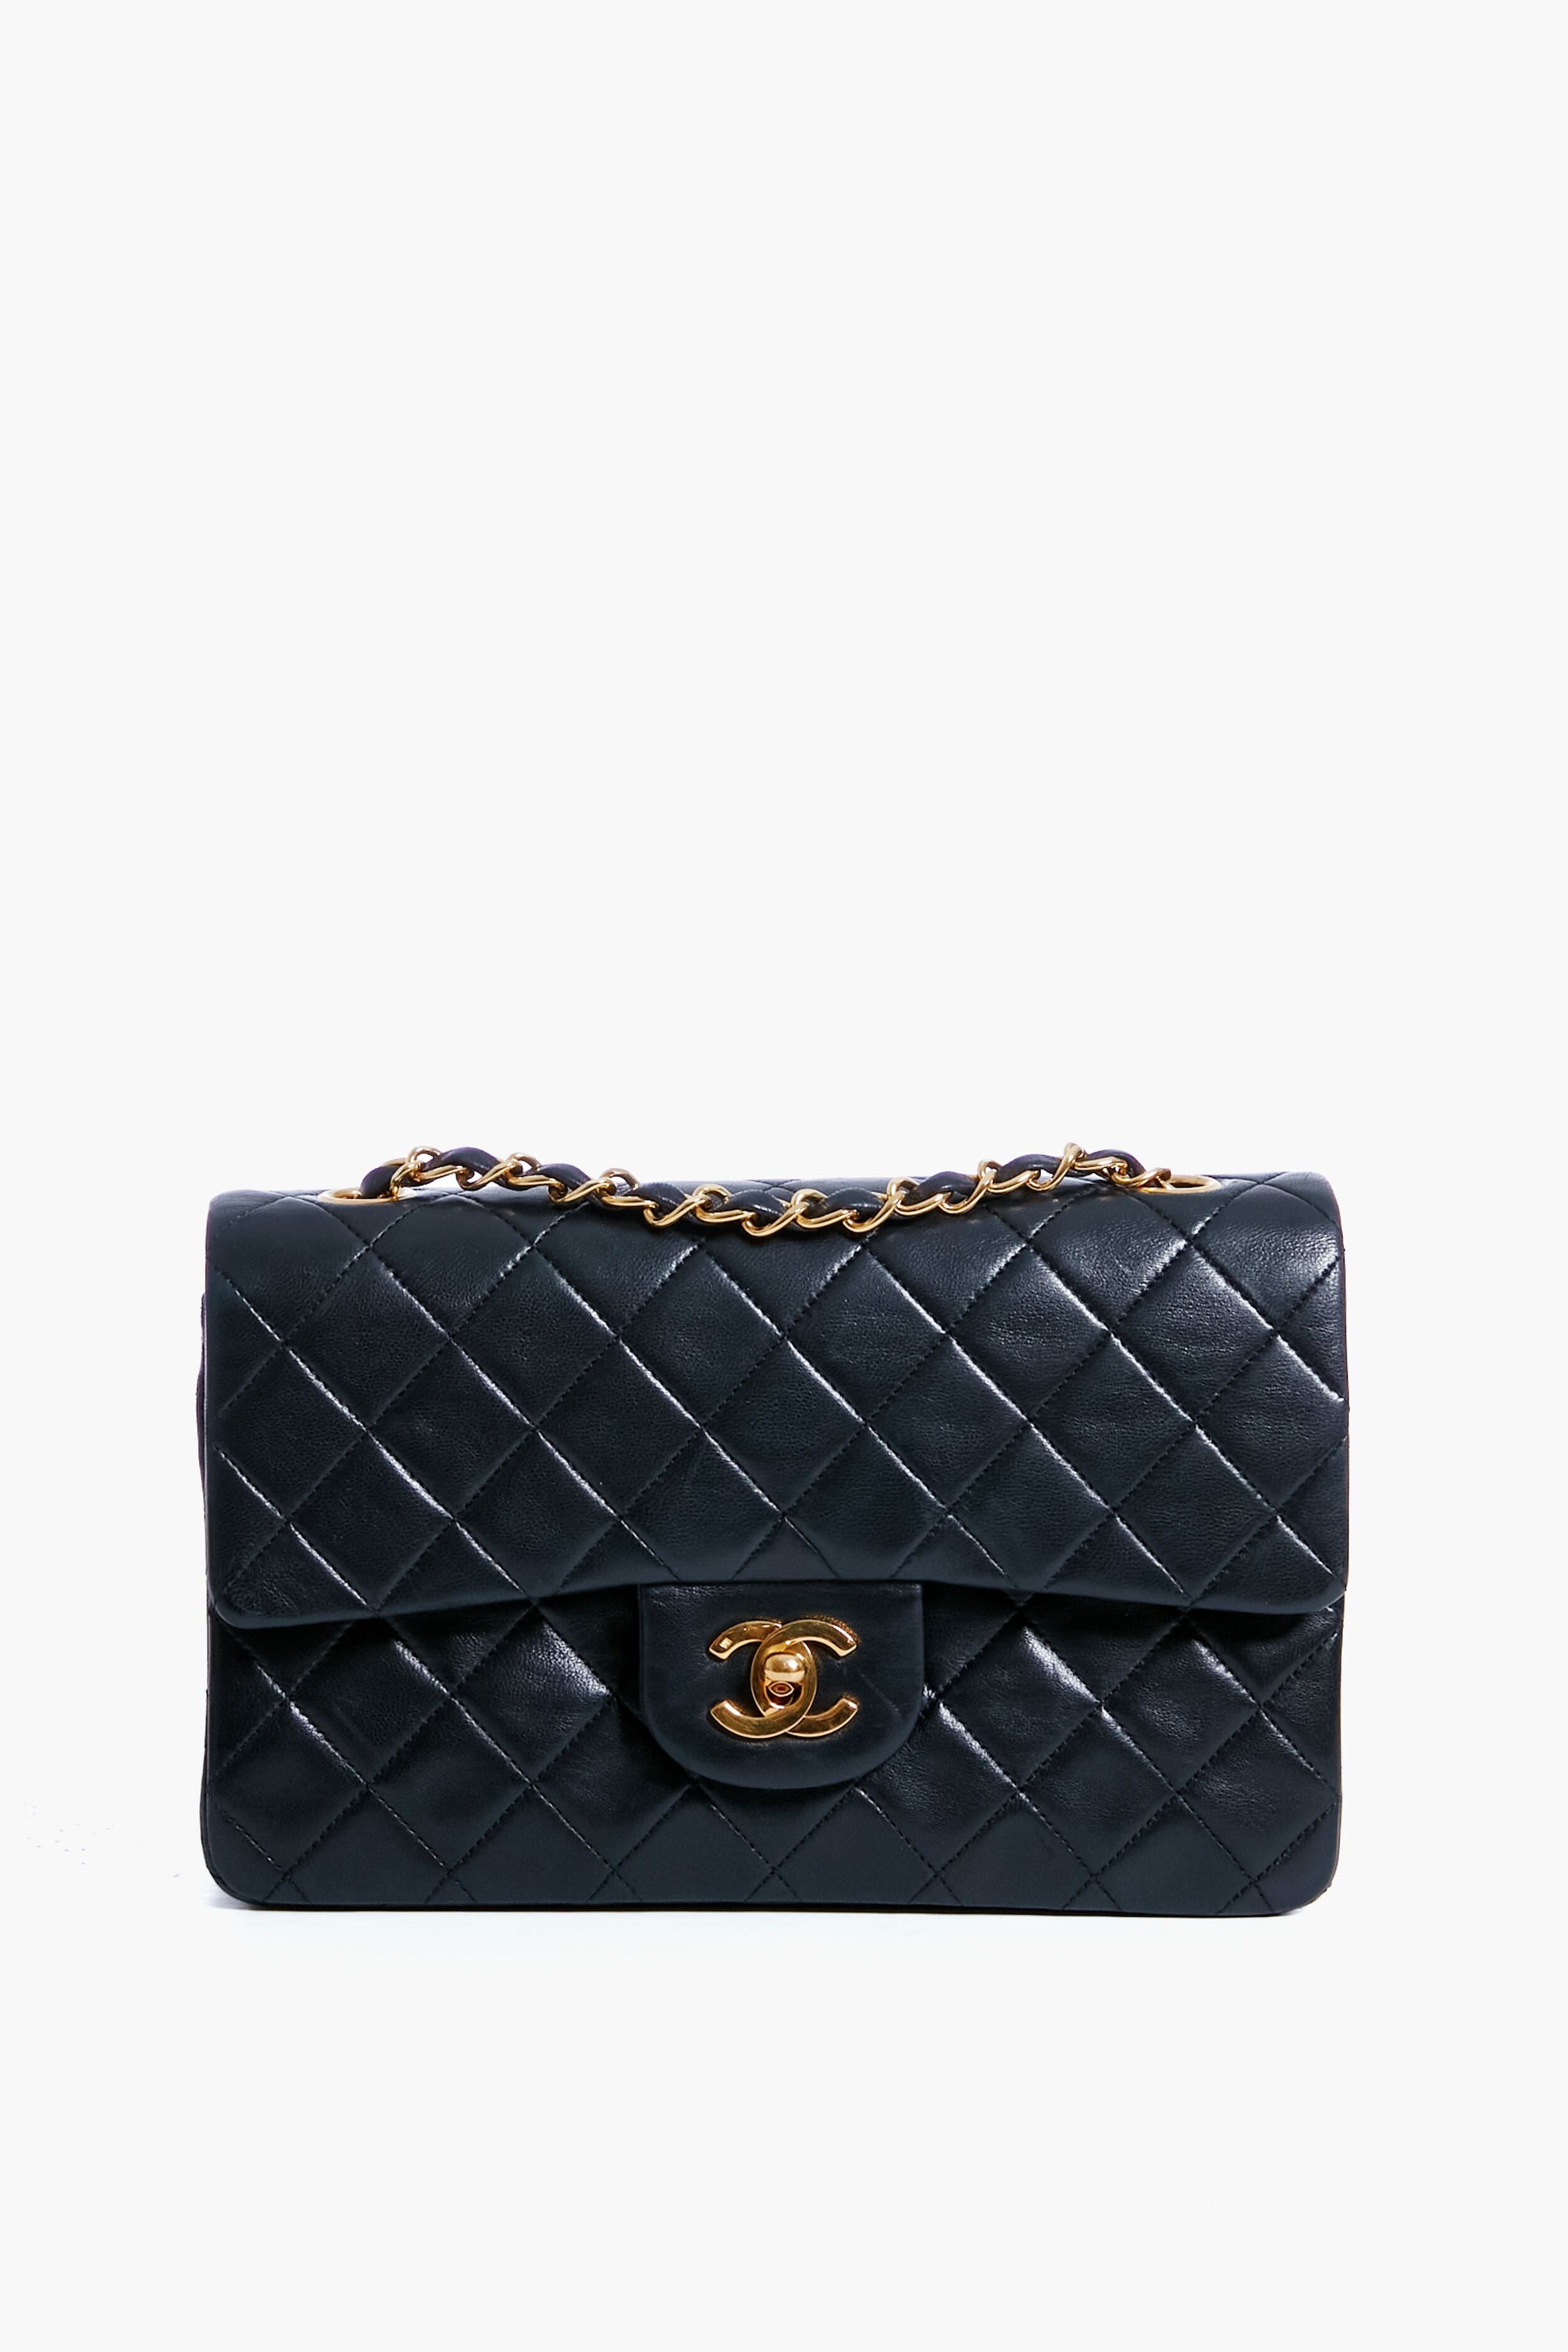 caviar chanel handbag authentic